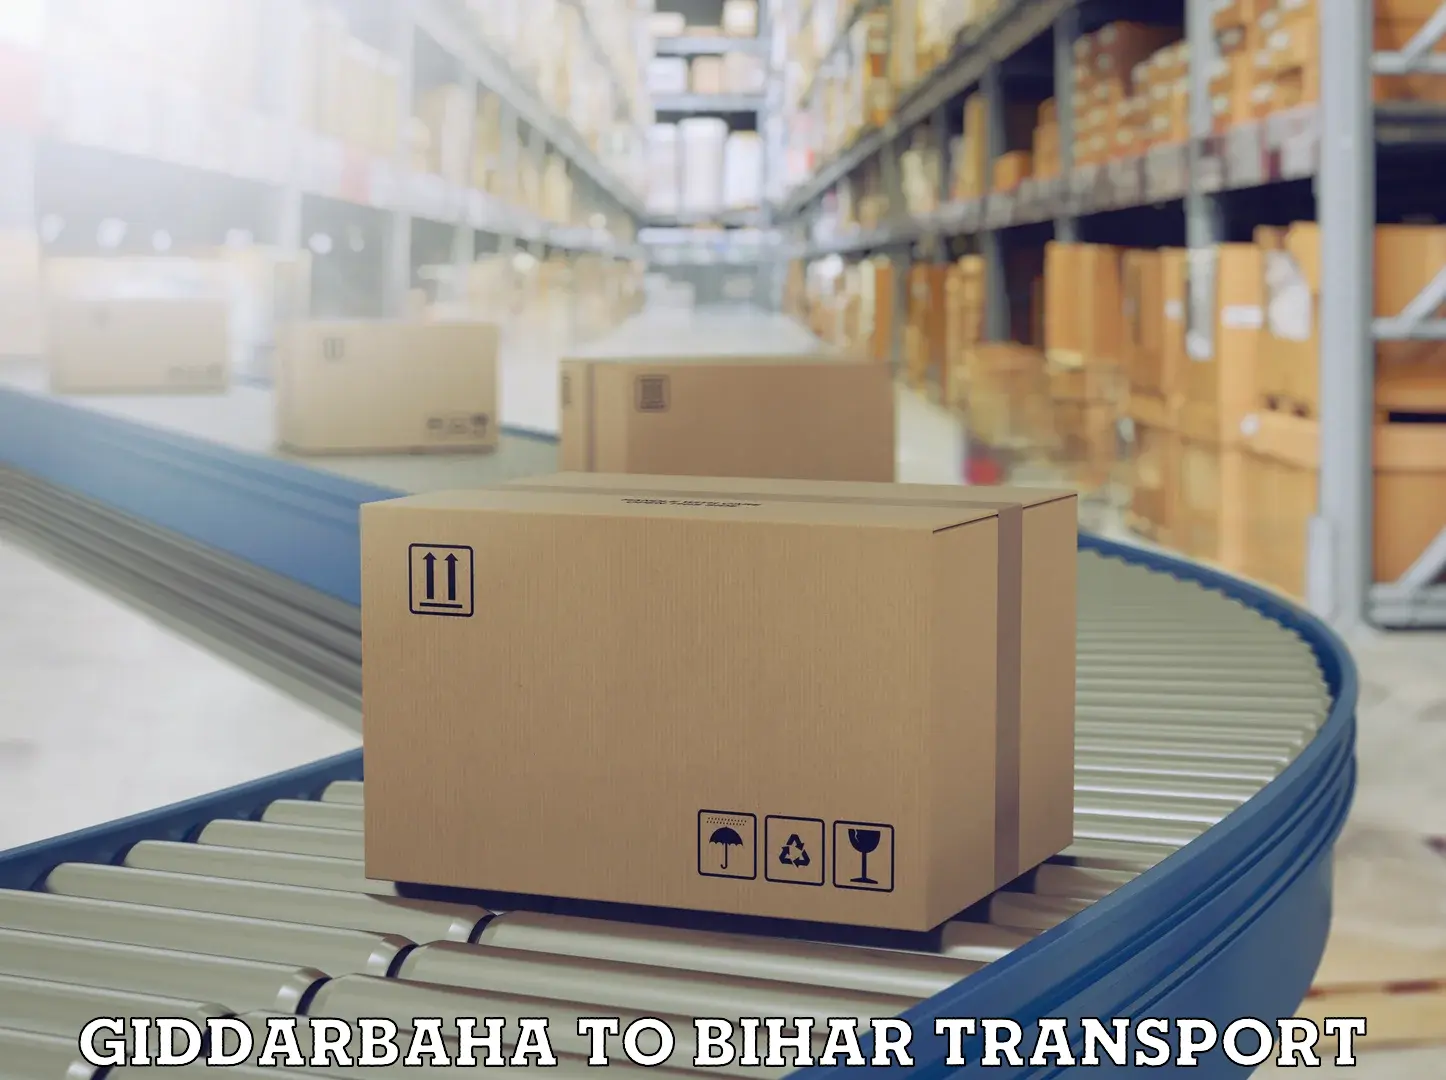 Truck transport companies in India Giddarbaha to Danapur